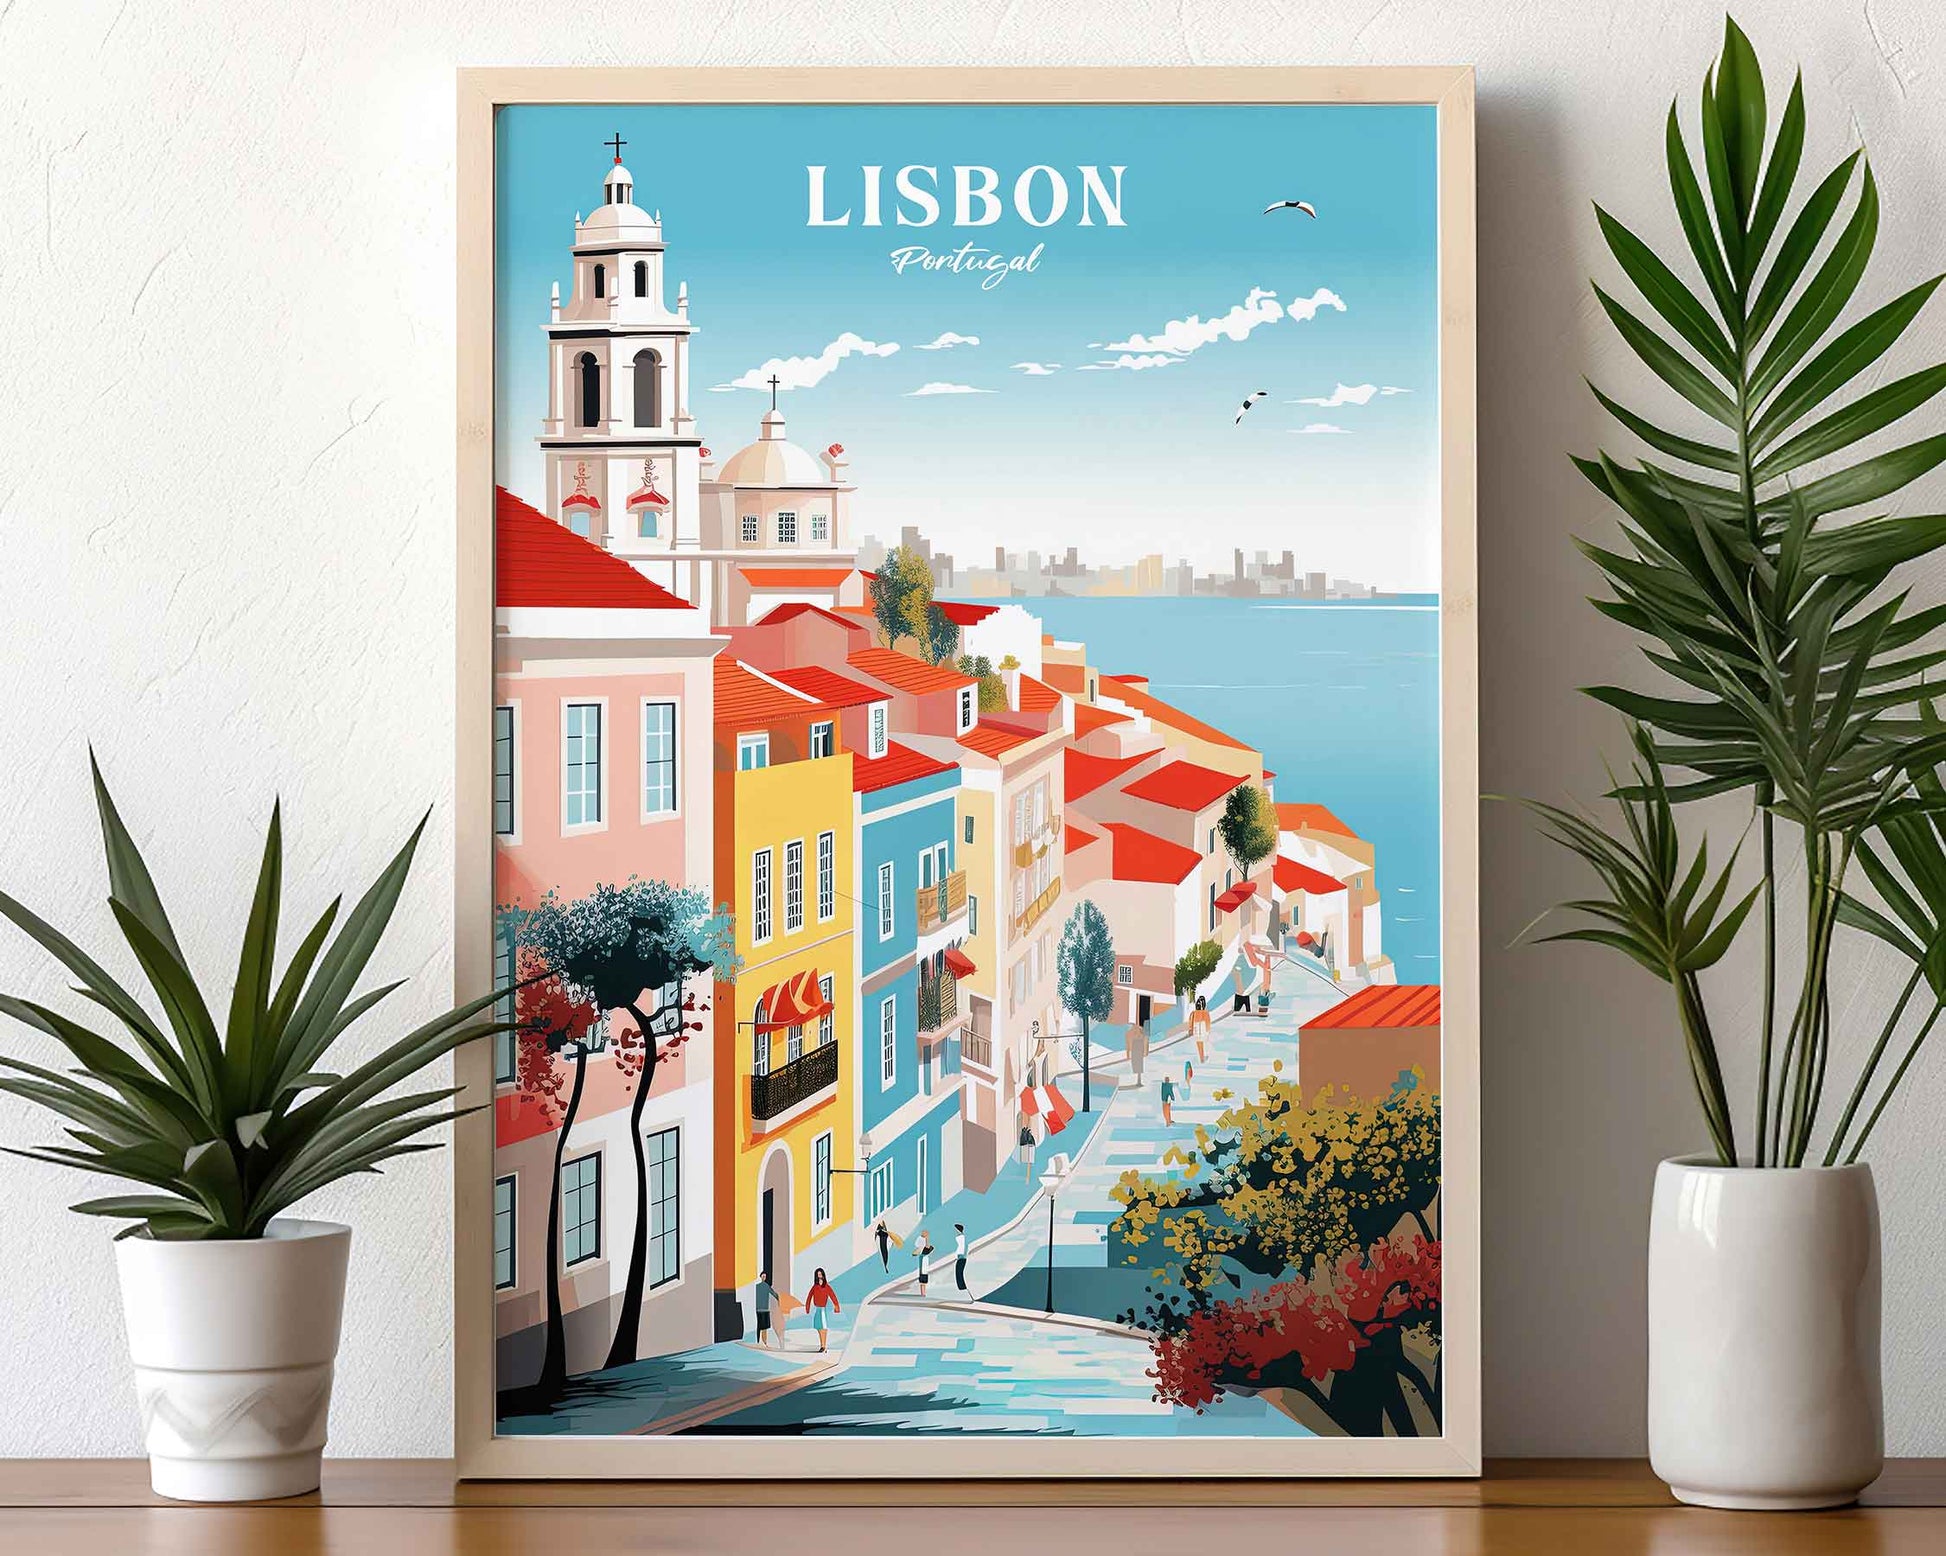 Framed Image of Lisbon Portugal Print Travel Posters Illustration Wall Art